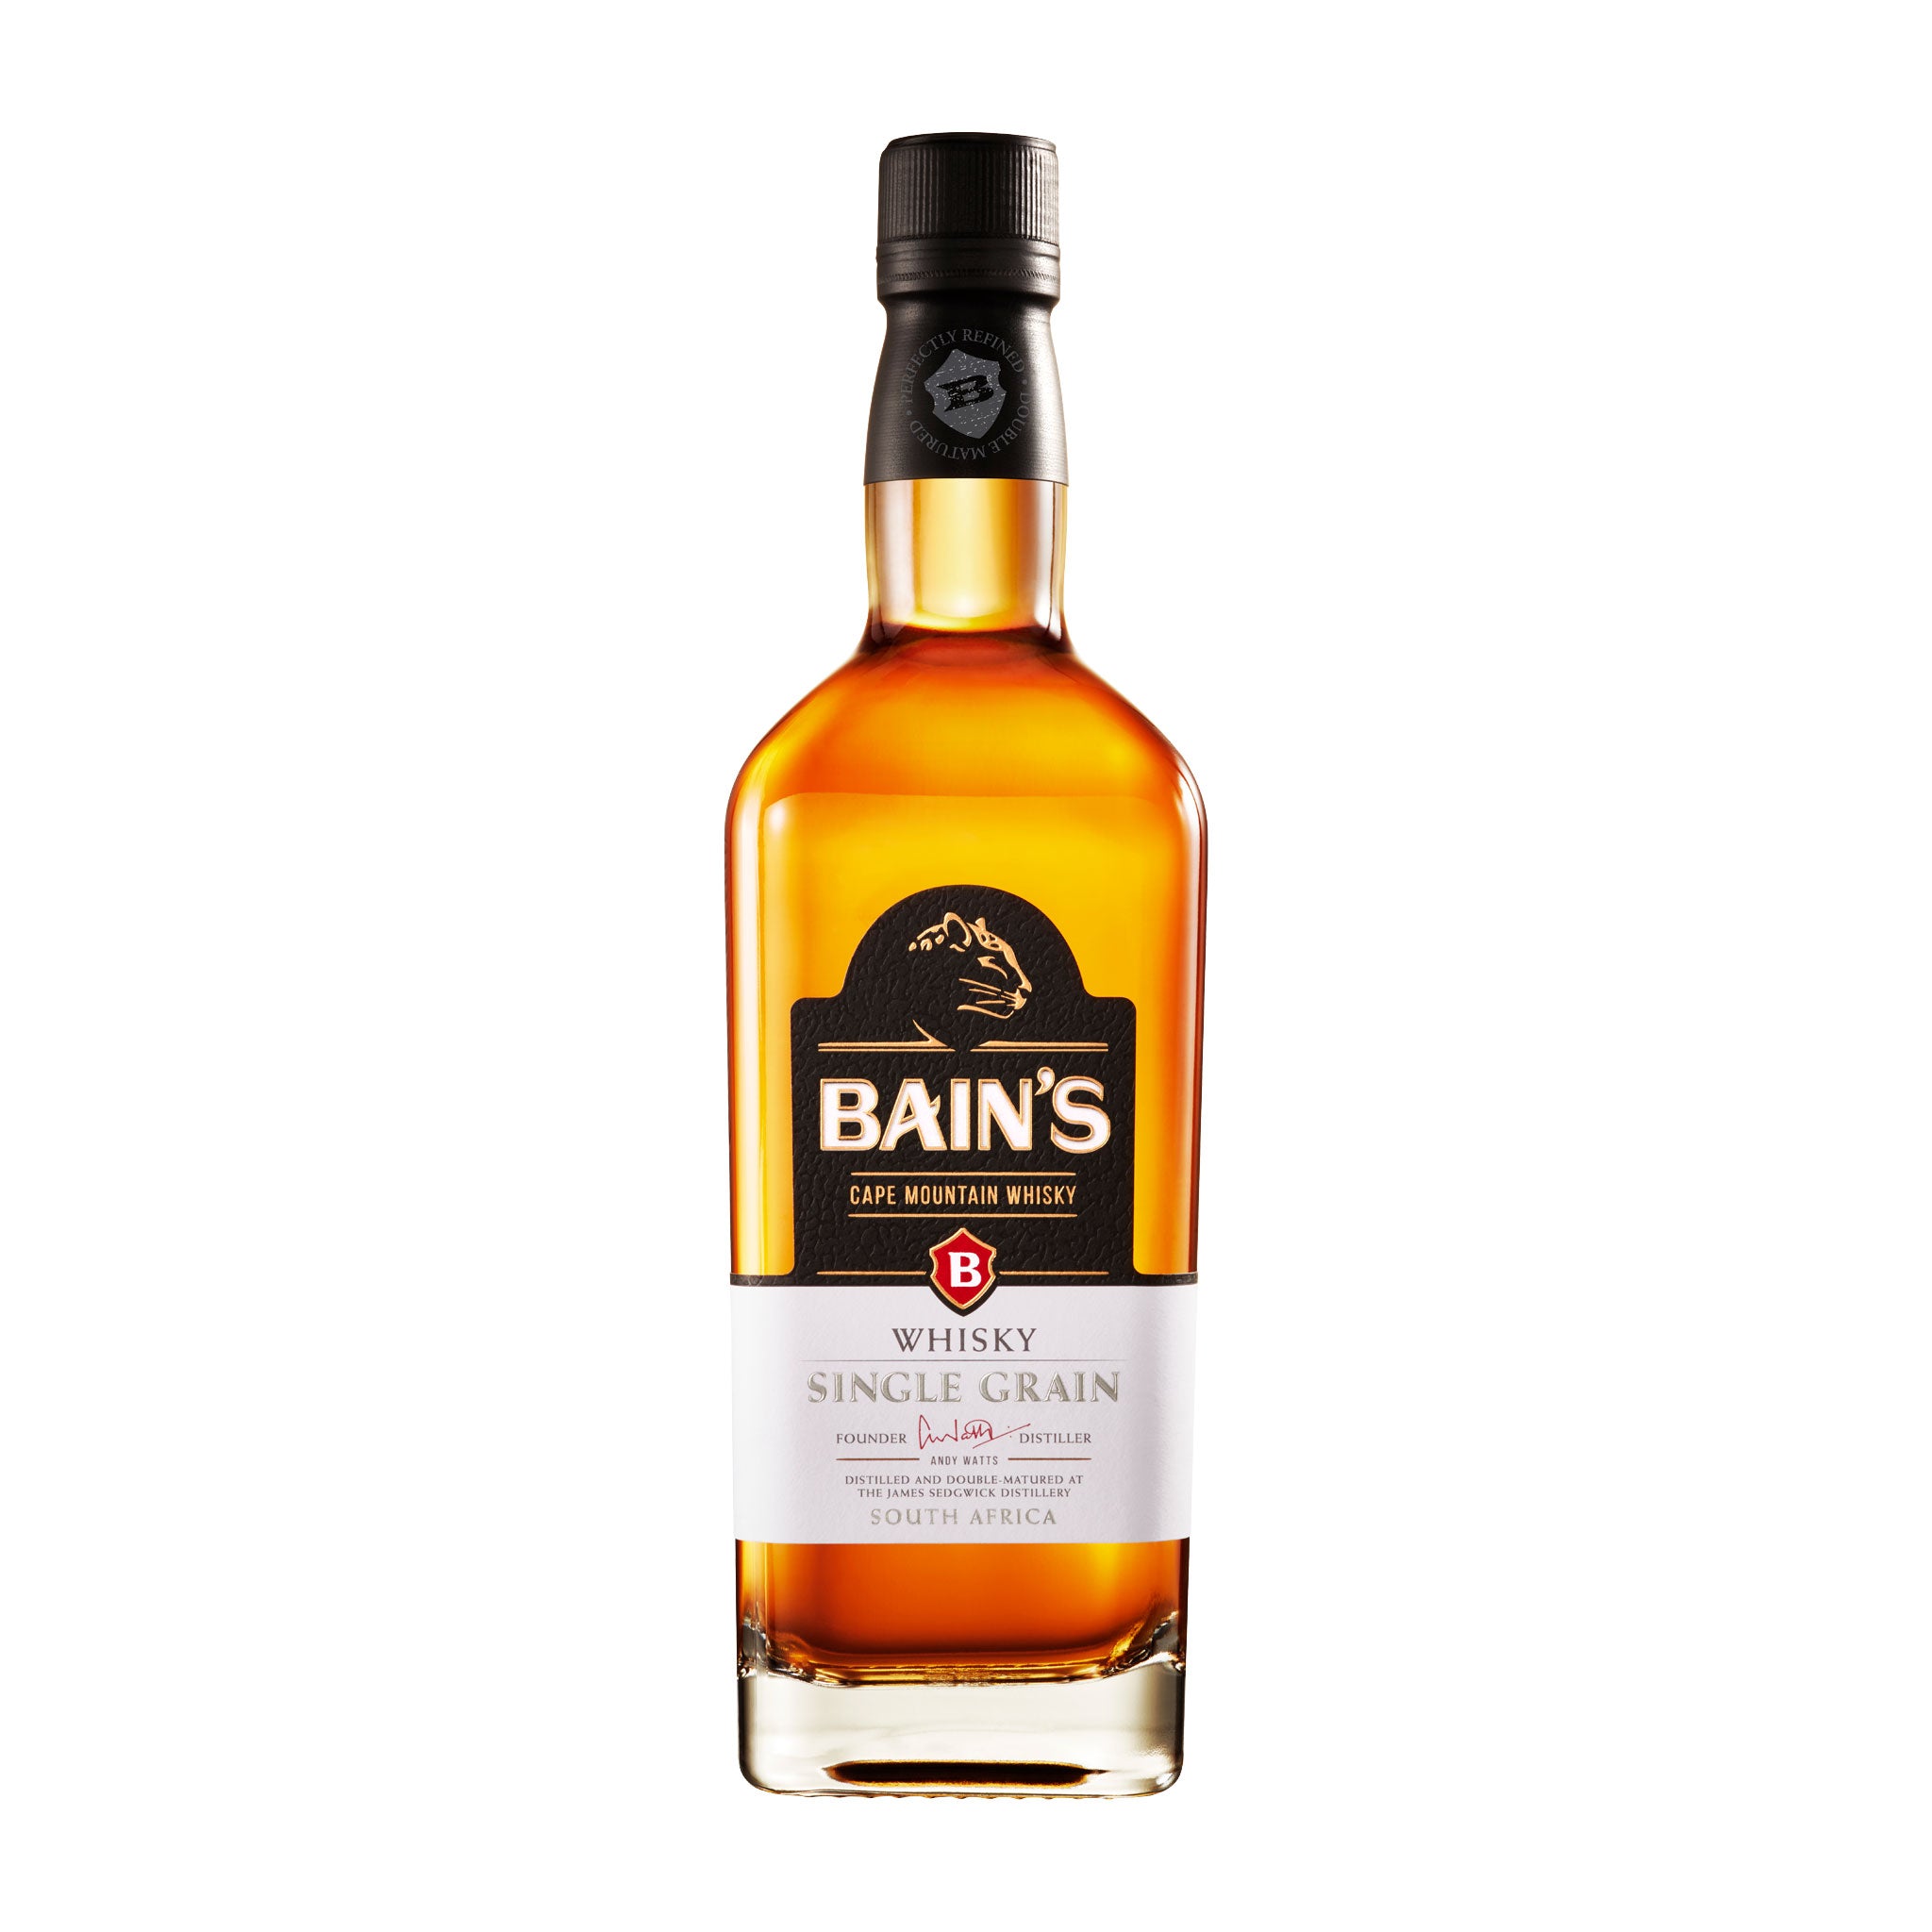 Bain's Cape Mountain Whisky Gift box